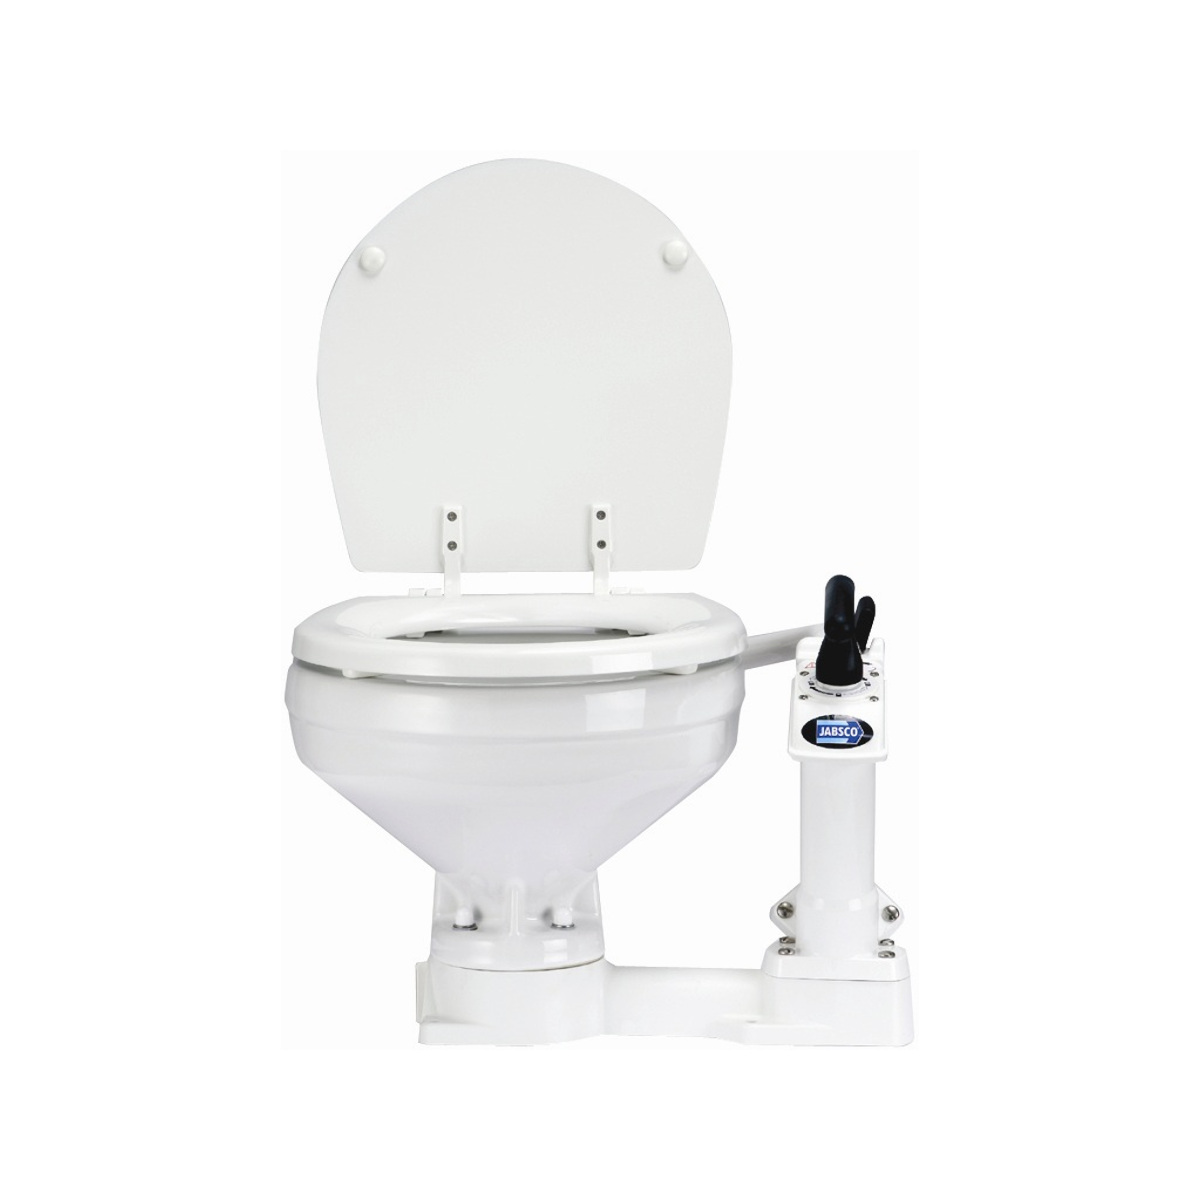 Jabsco WC marin compact Twist'n'Lock, pompe et base incluses